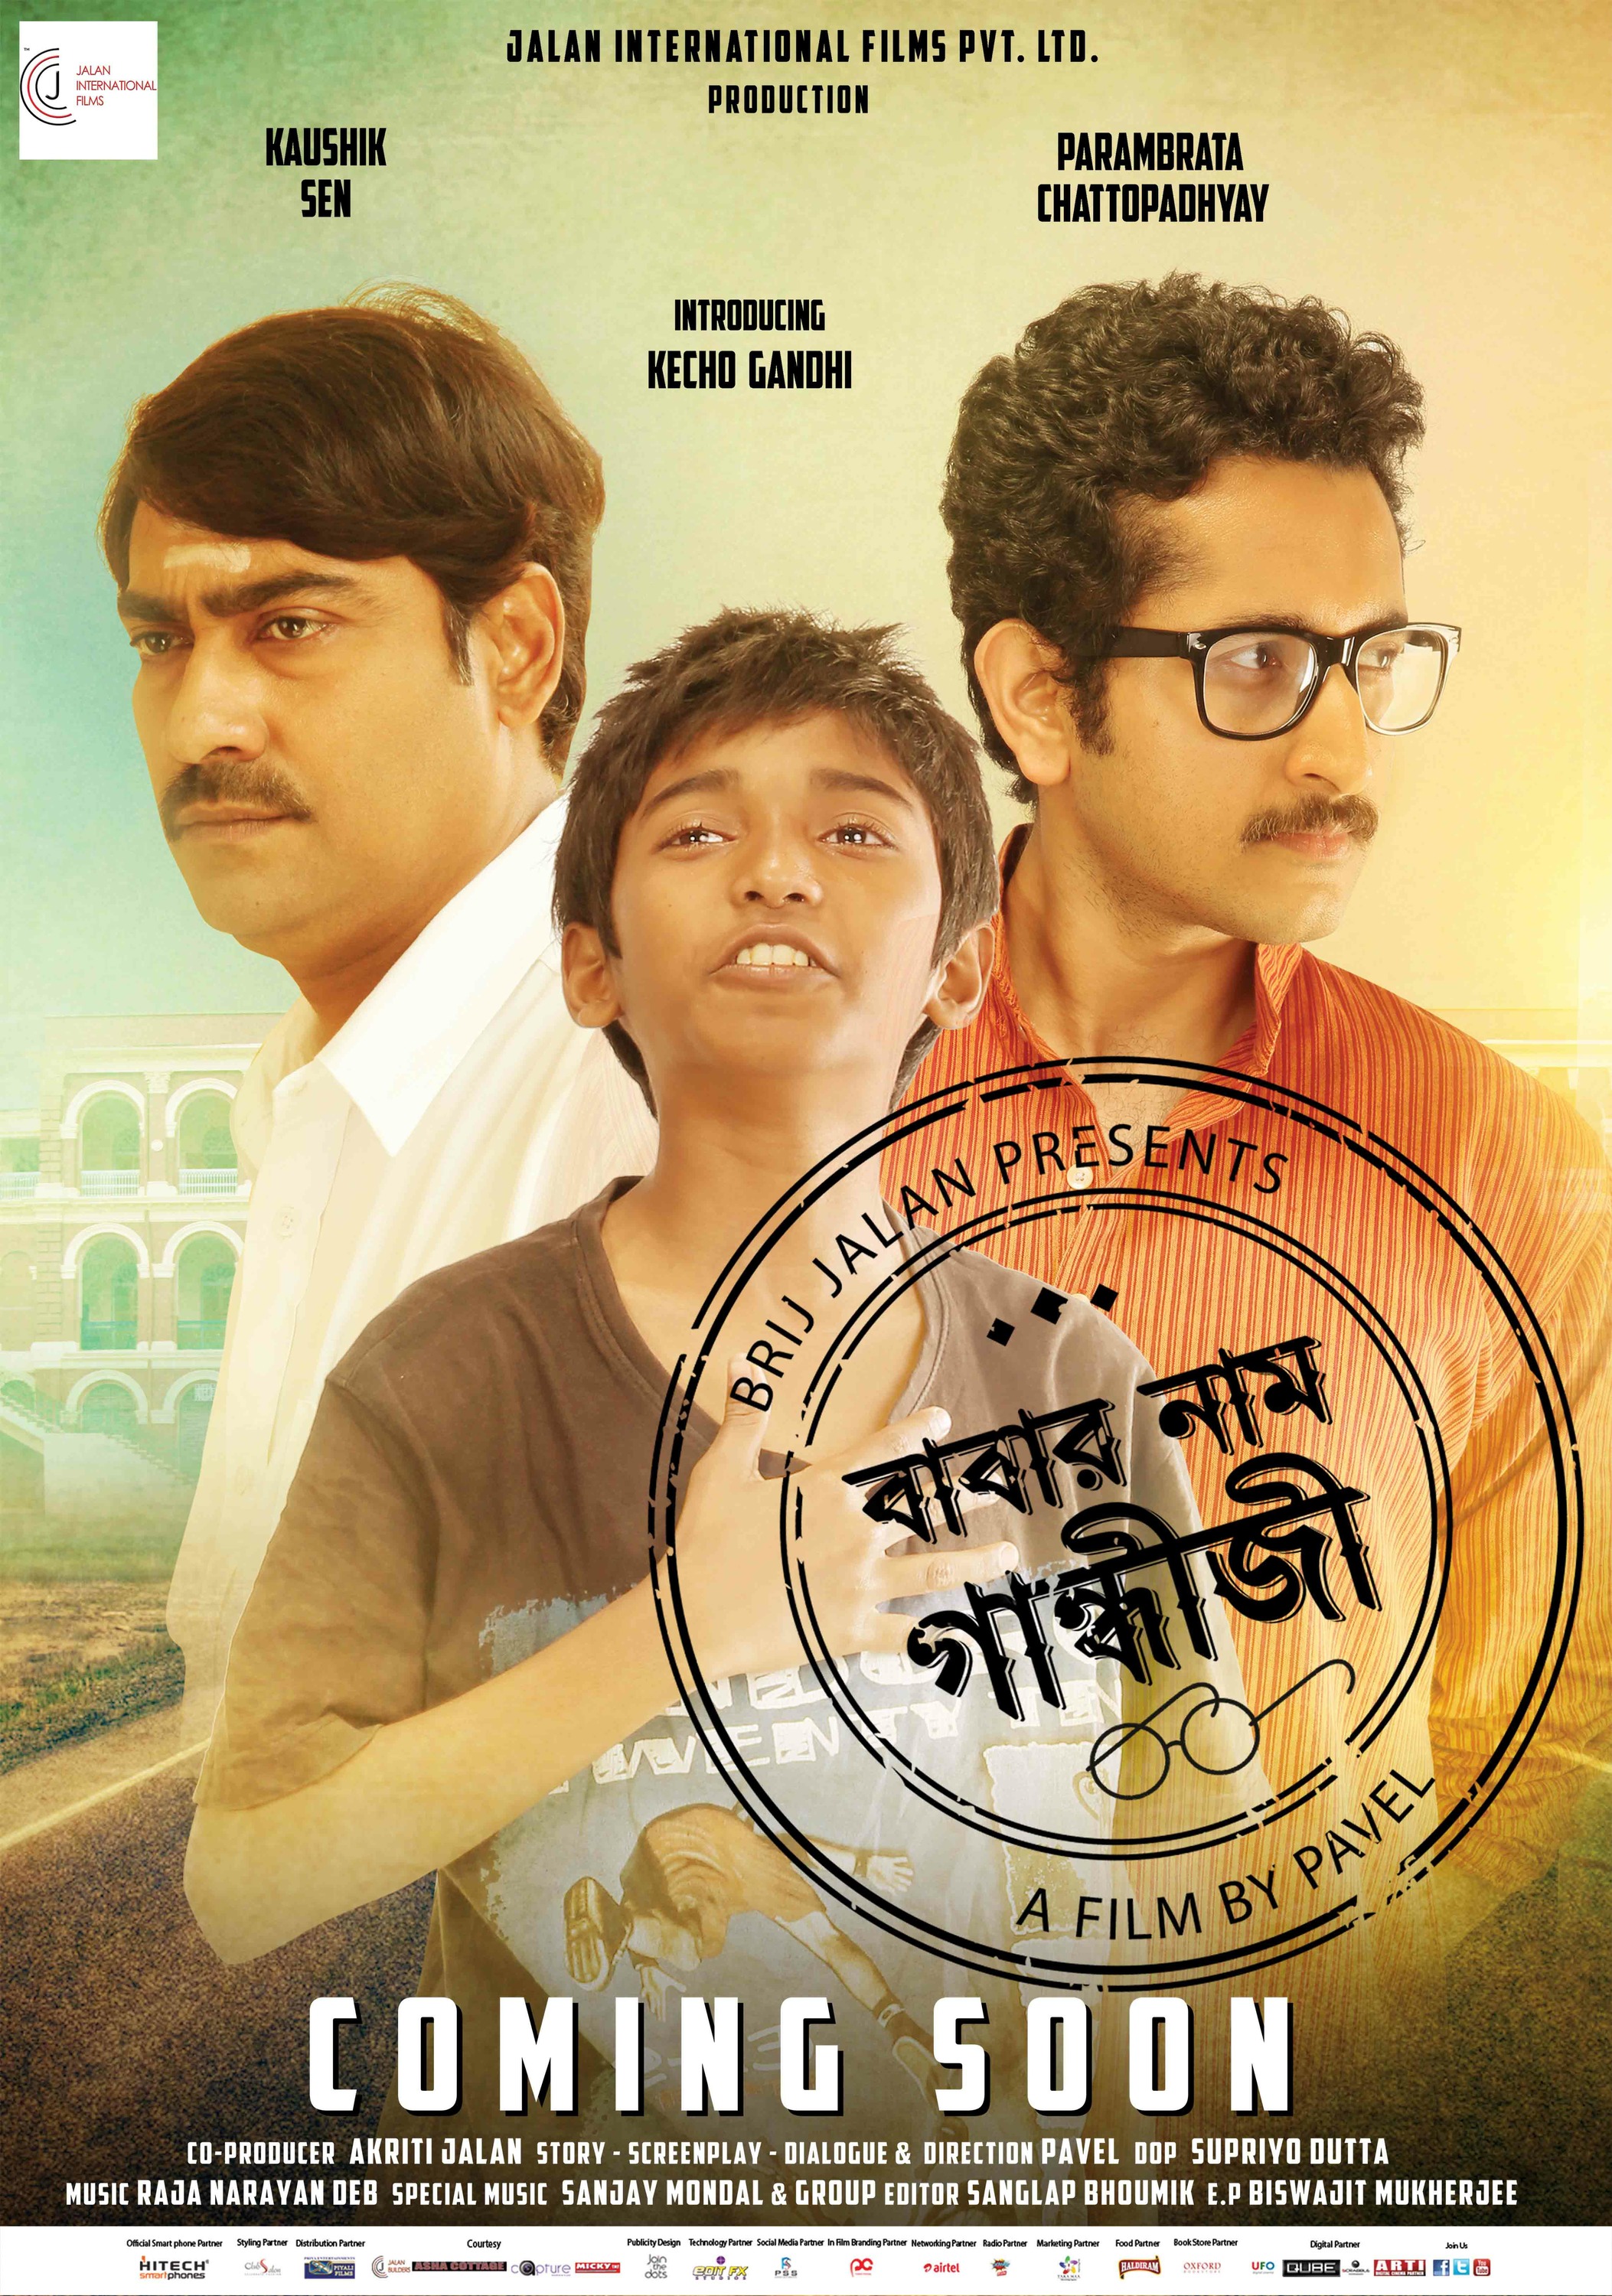 Mega Sized Movie Poster Image for Babar Naam Gandhiji (#1 of 5)